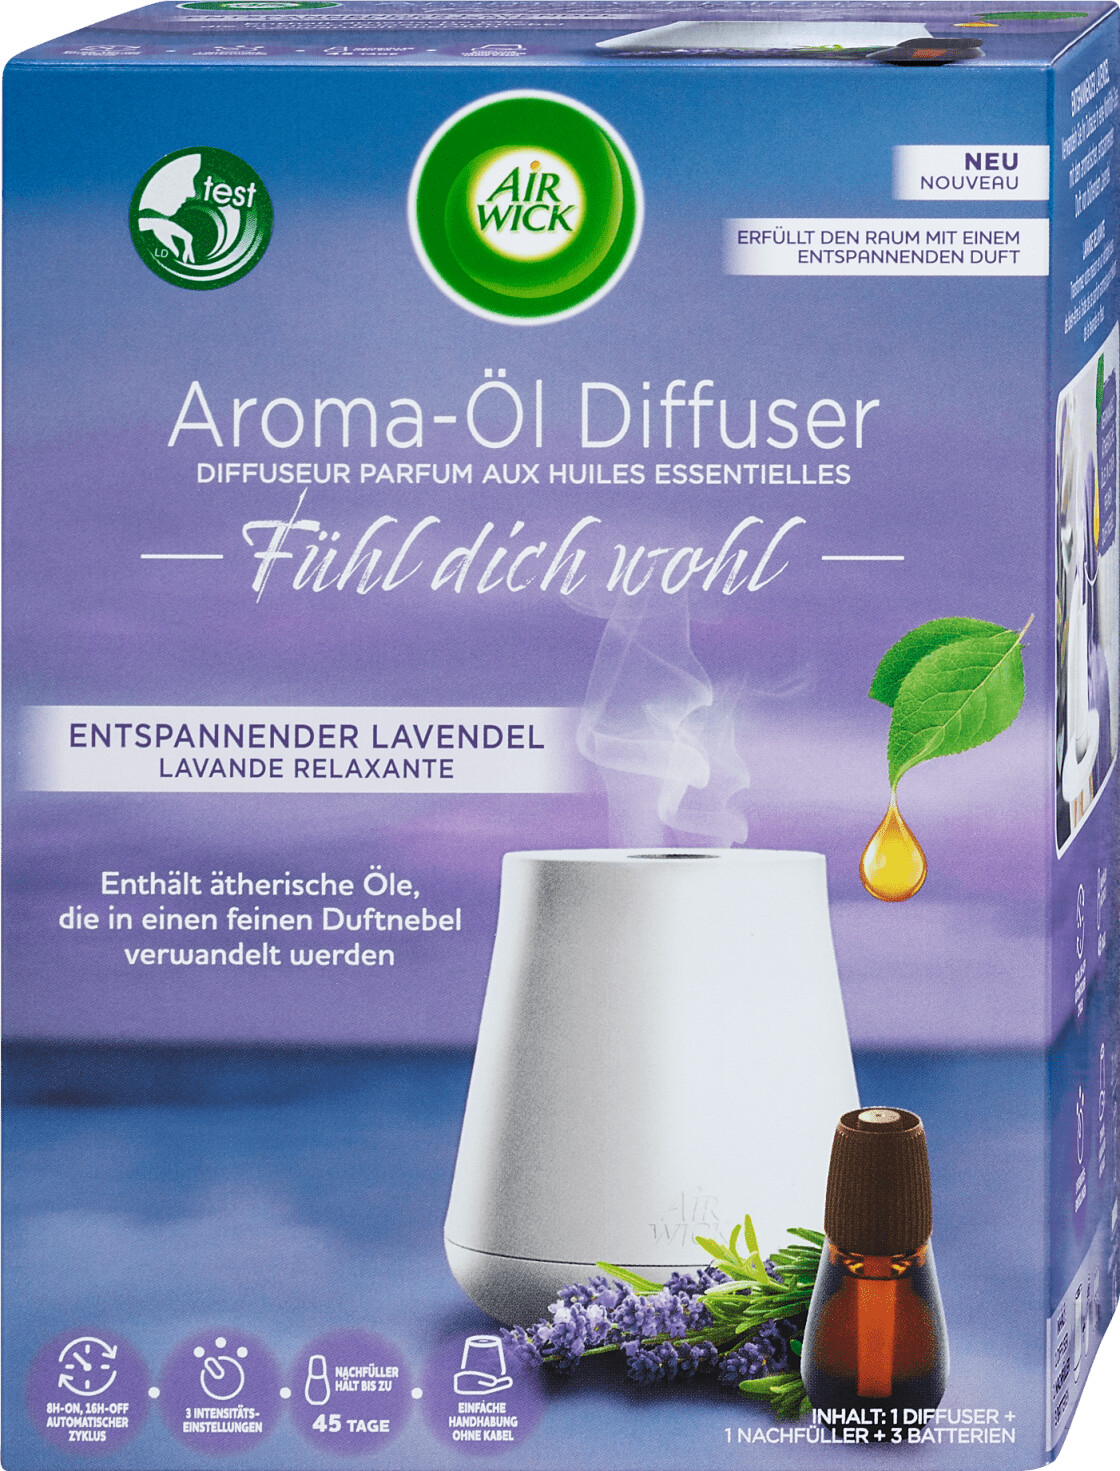 Airwick Aroma-Öl Diffuser Starter Entspannender Lavendel Set ab € 10,09